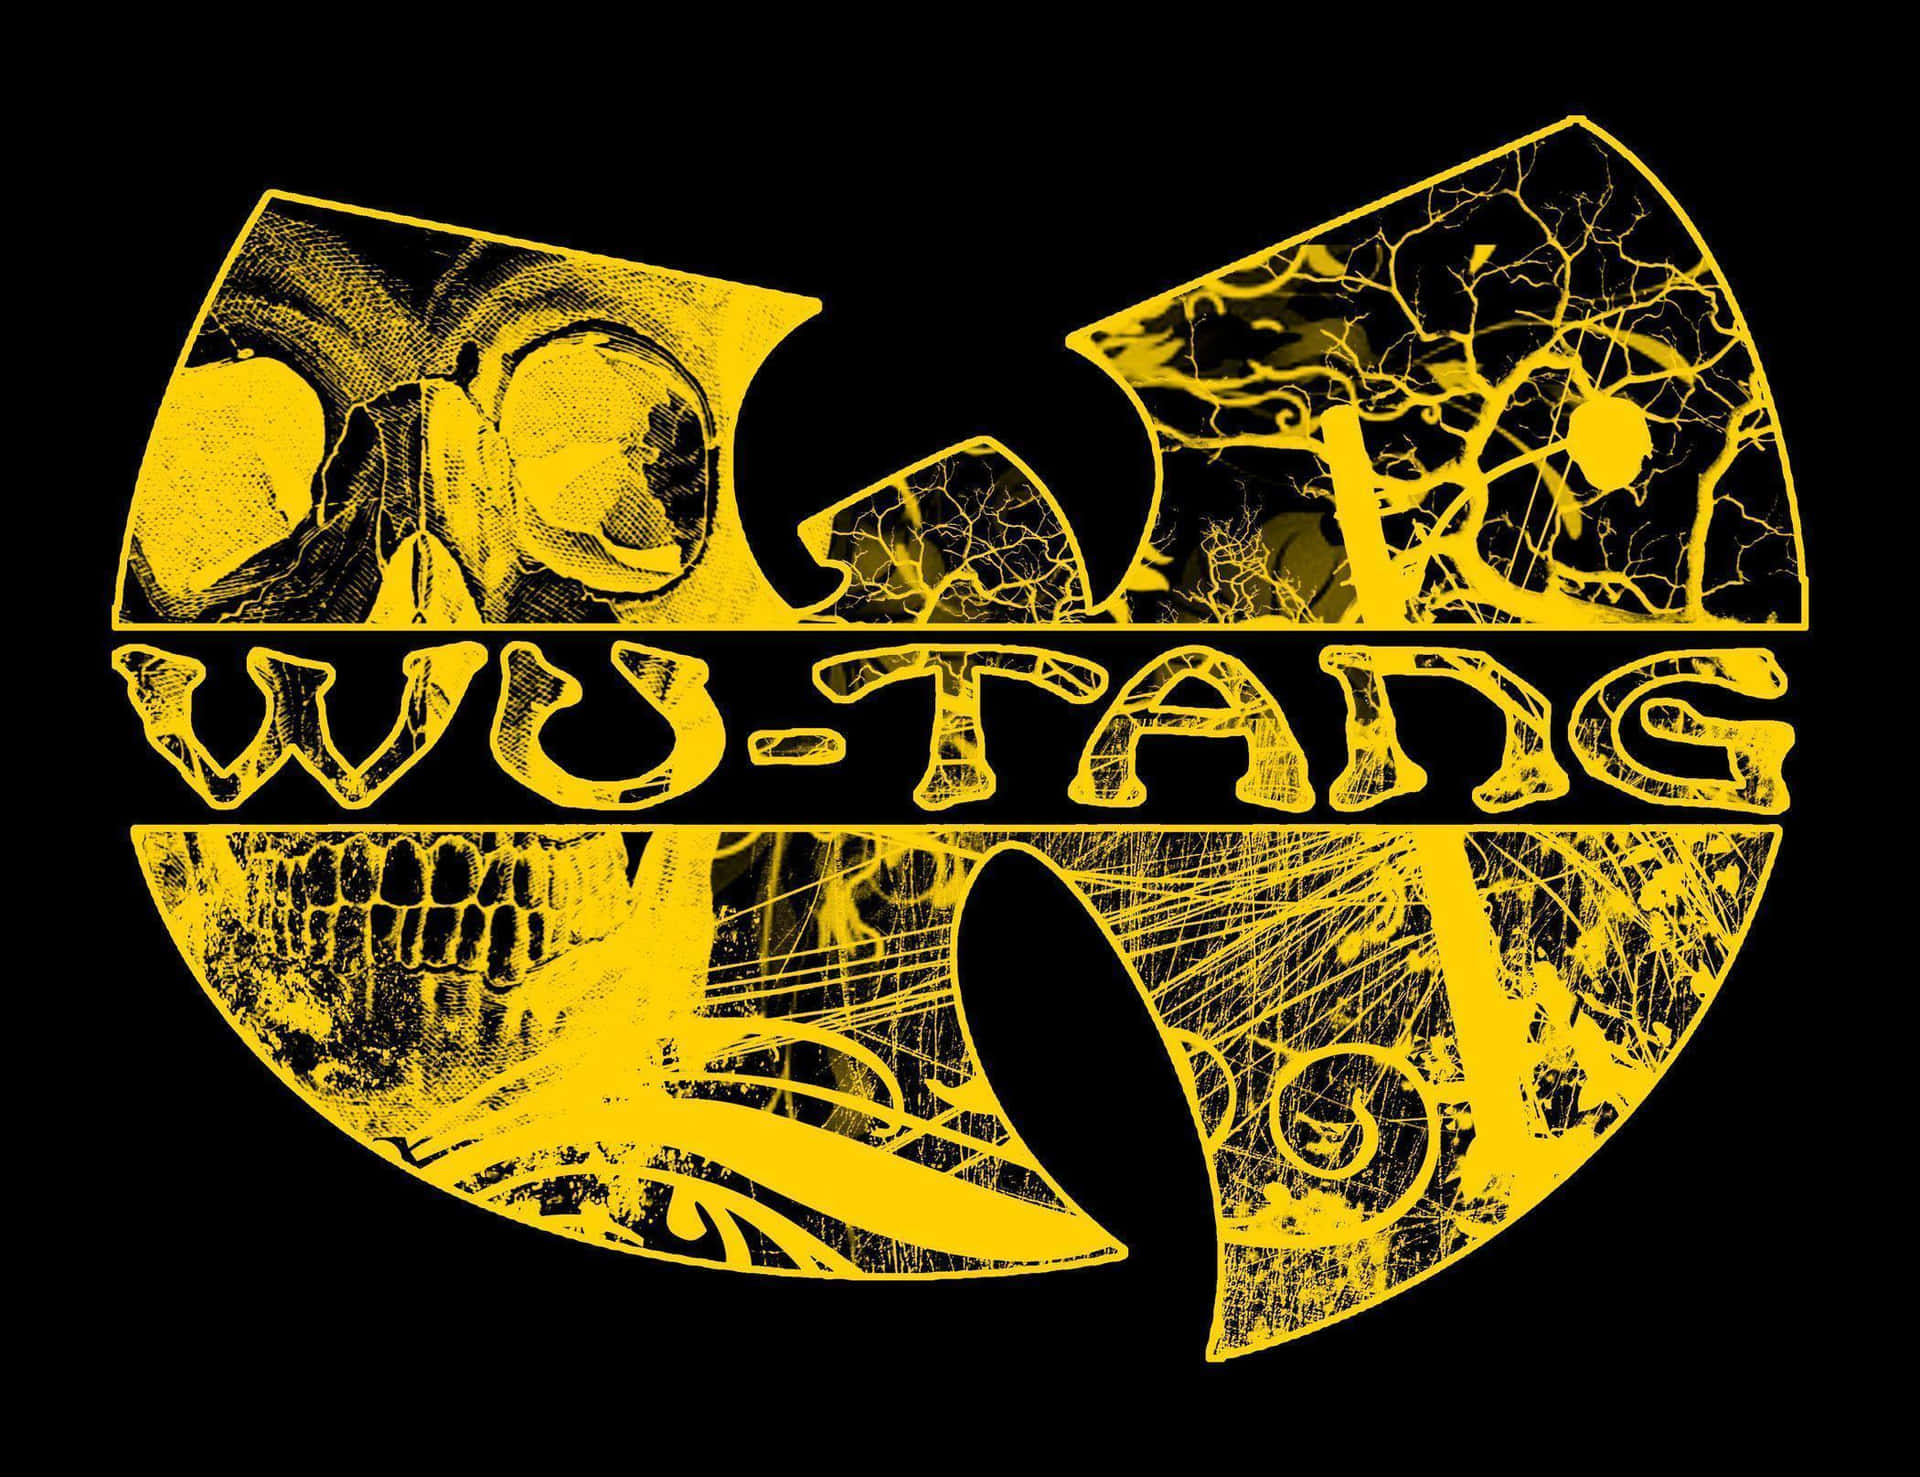 wu tang clan logo yellow